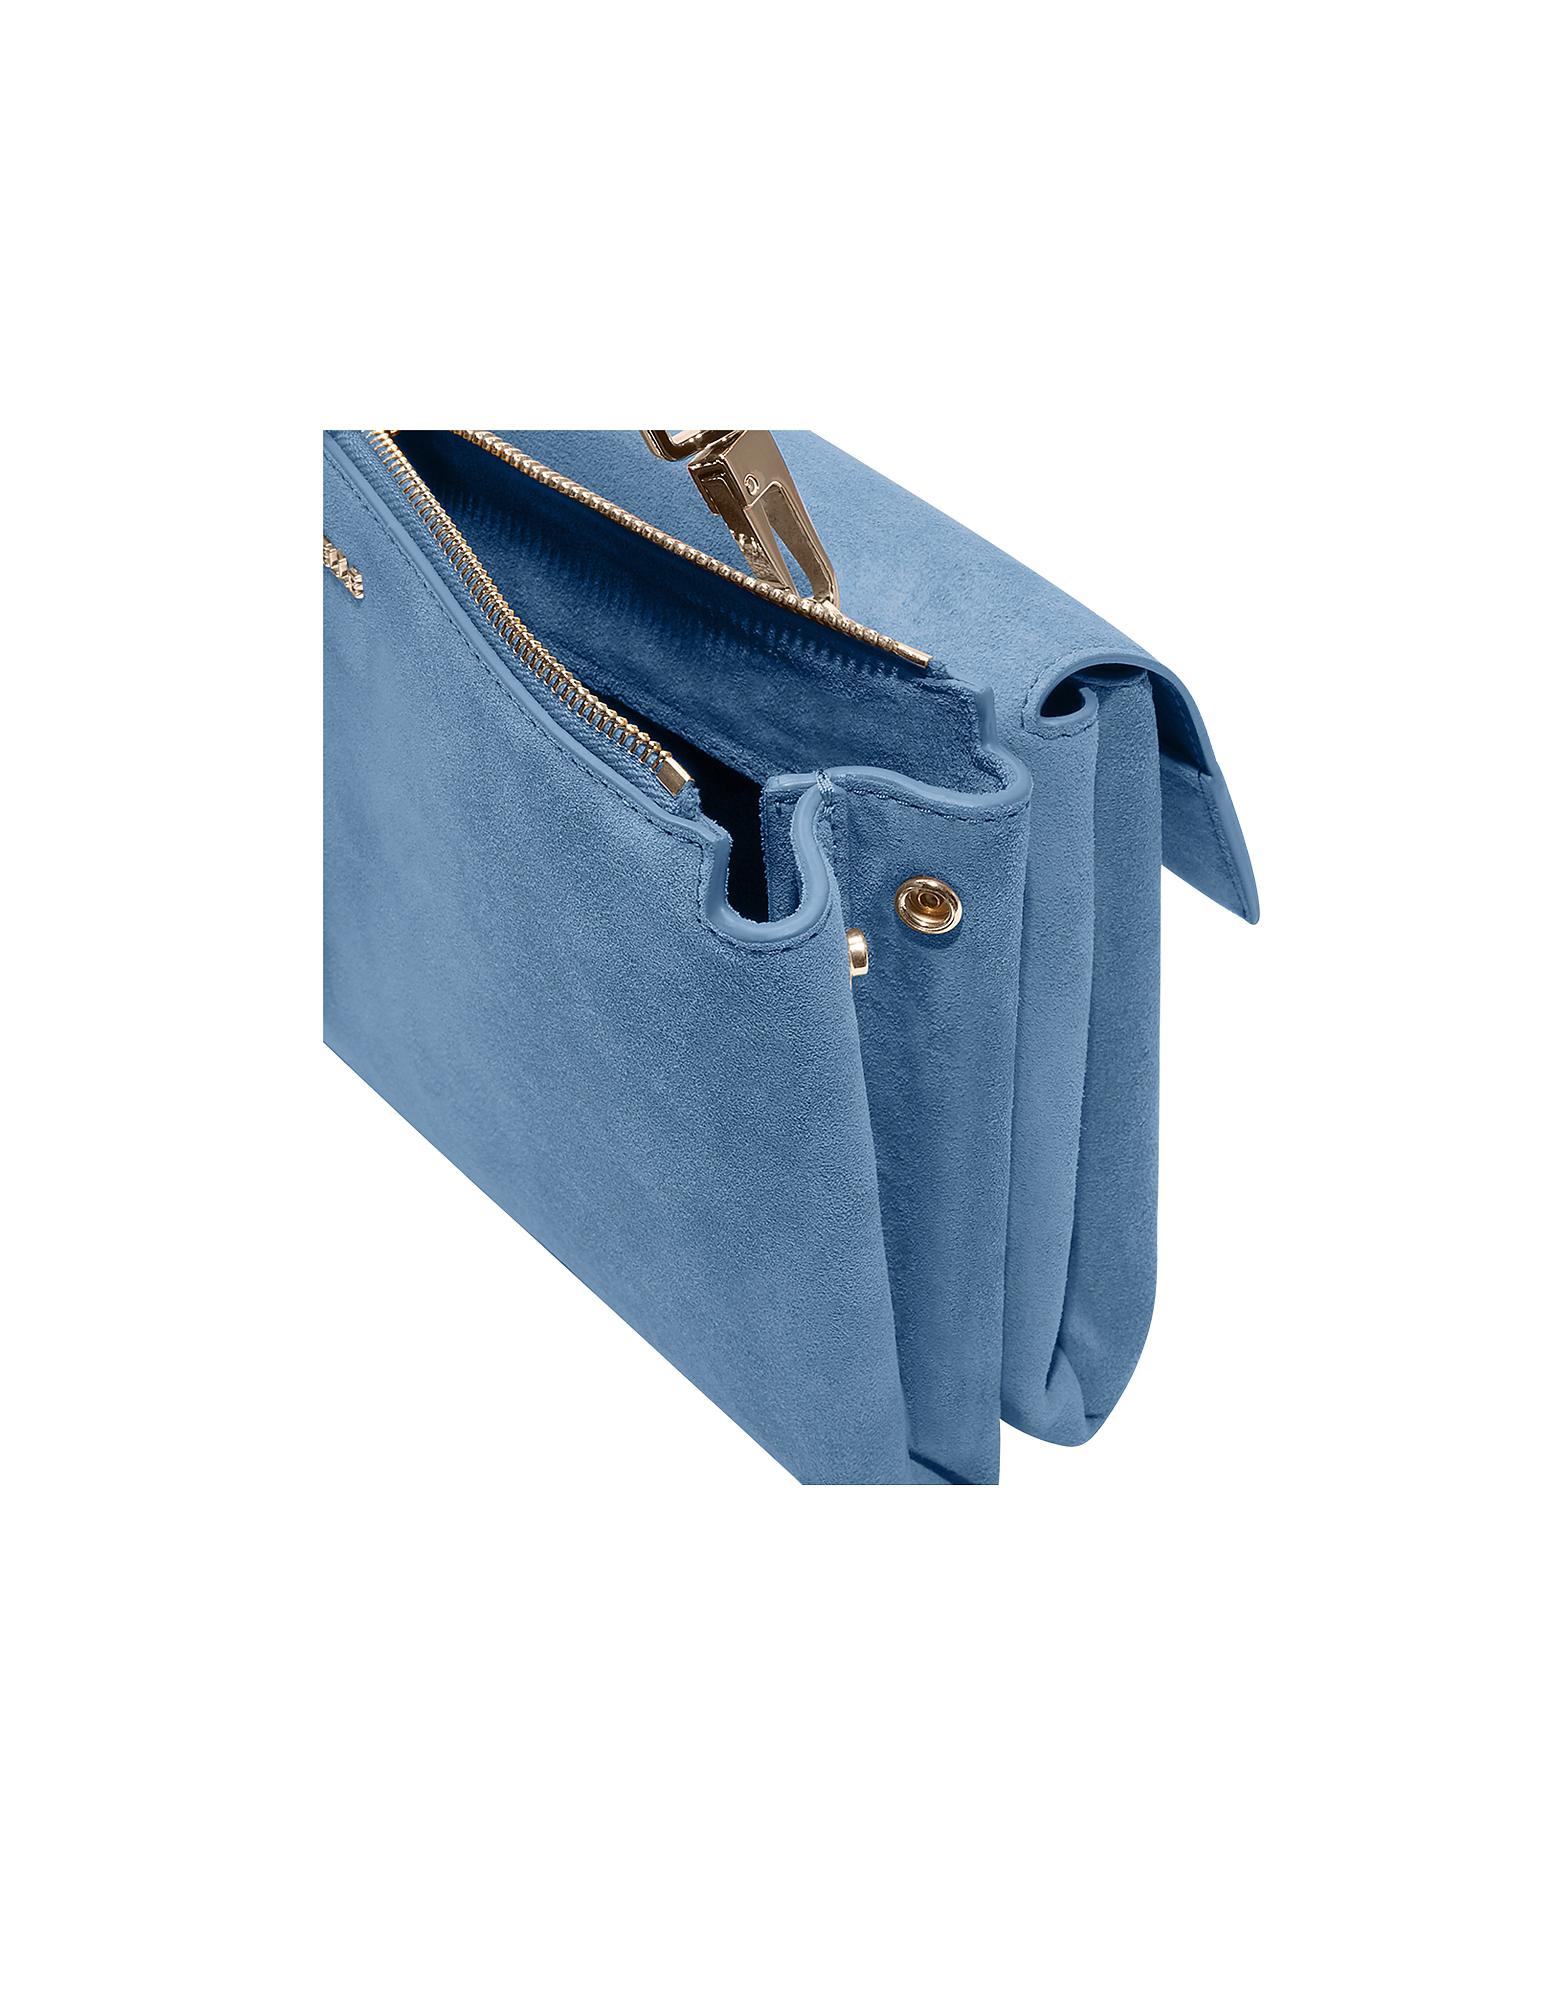 pale blue suede clutch bag